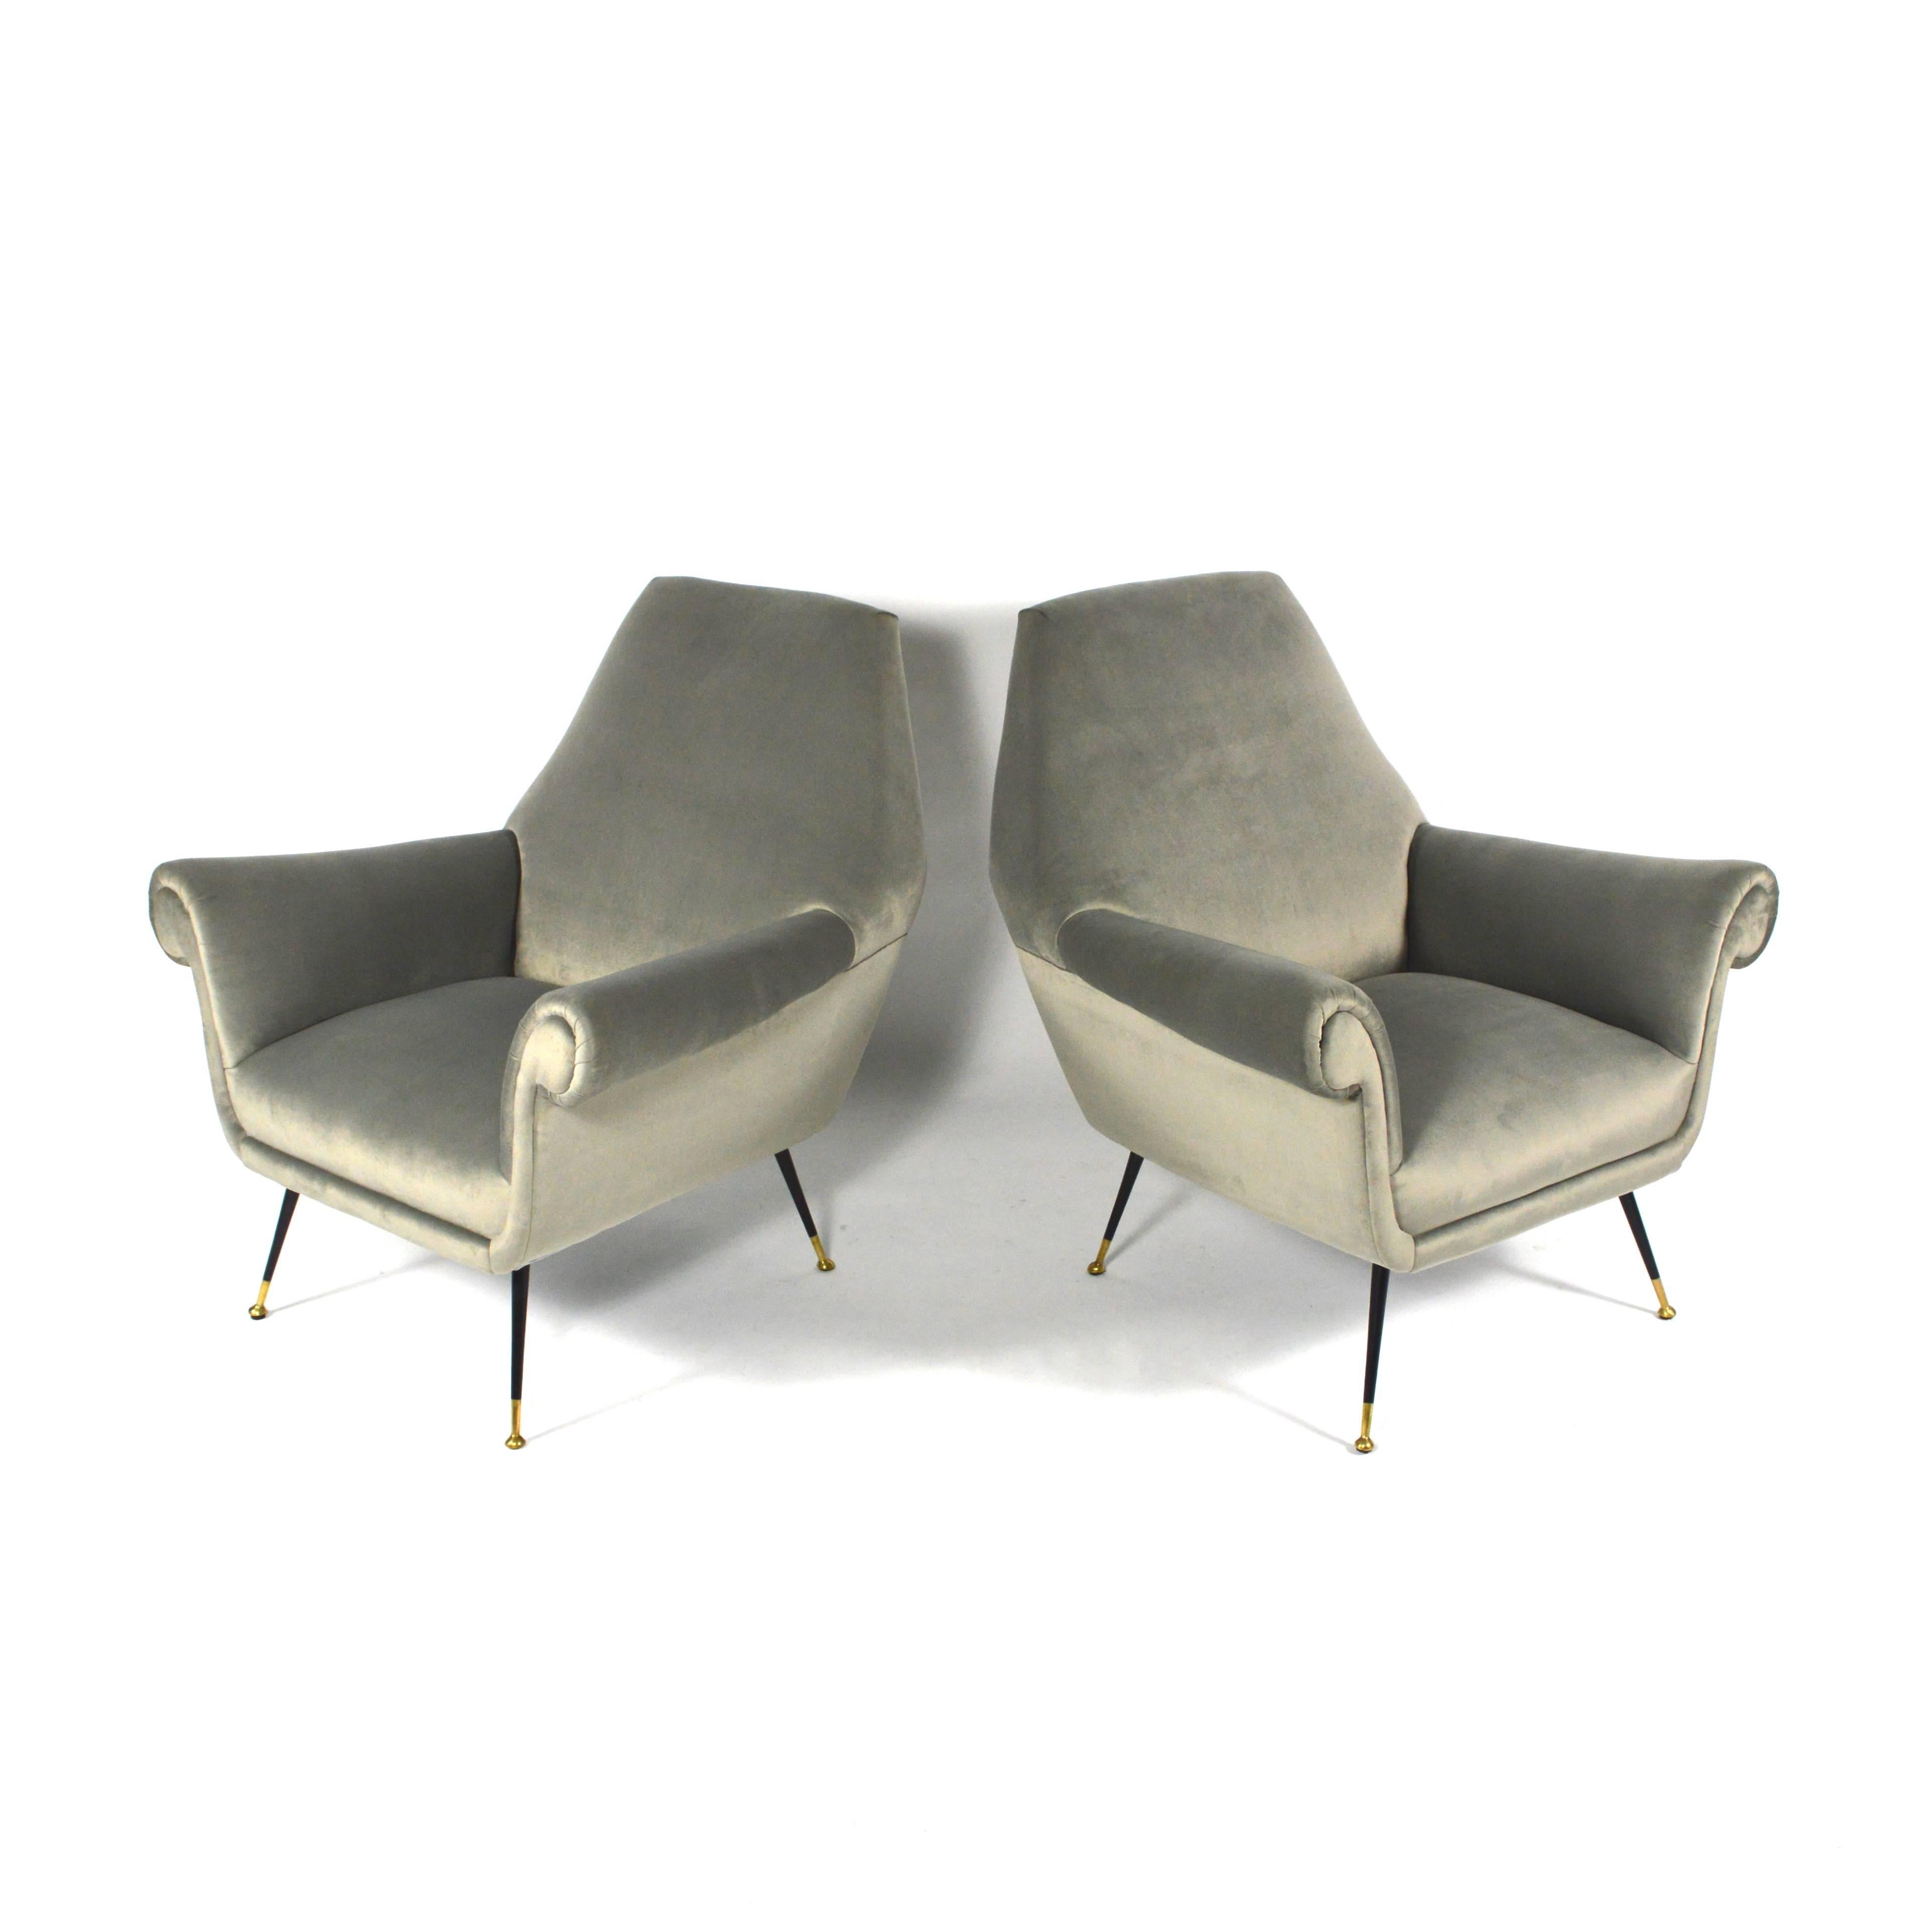 New light grey velvet upholstery.
Attributed design by Gigi Radice for Minotti.
Brass feet with black lacquered detail.